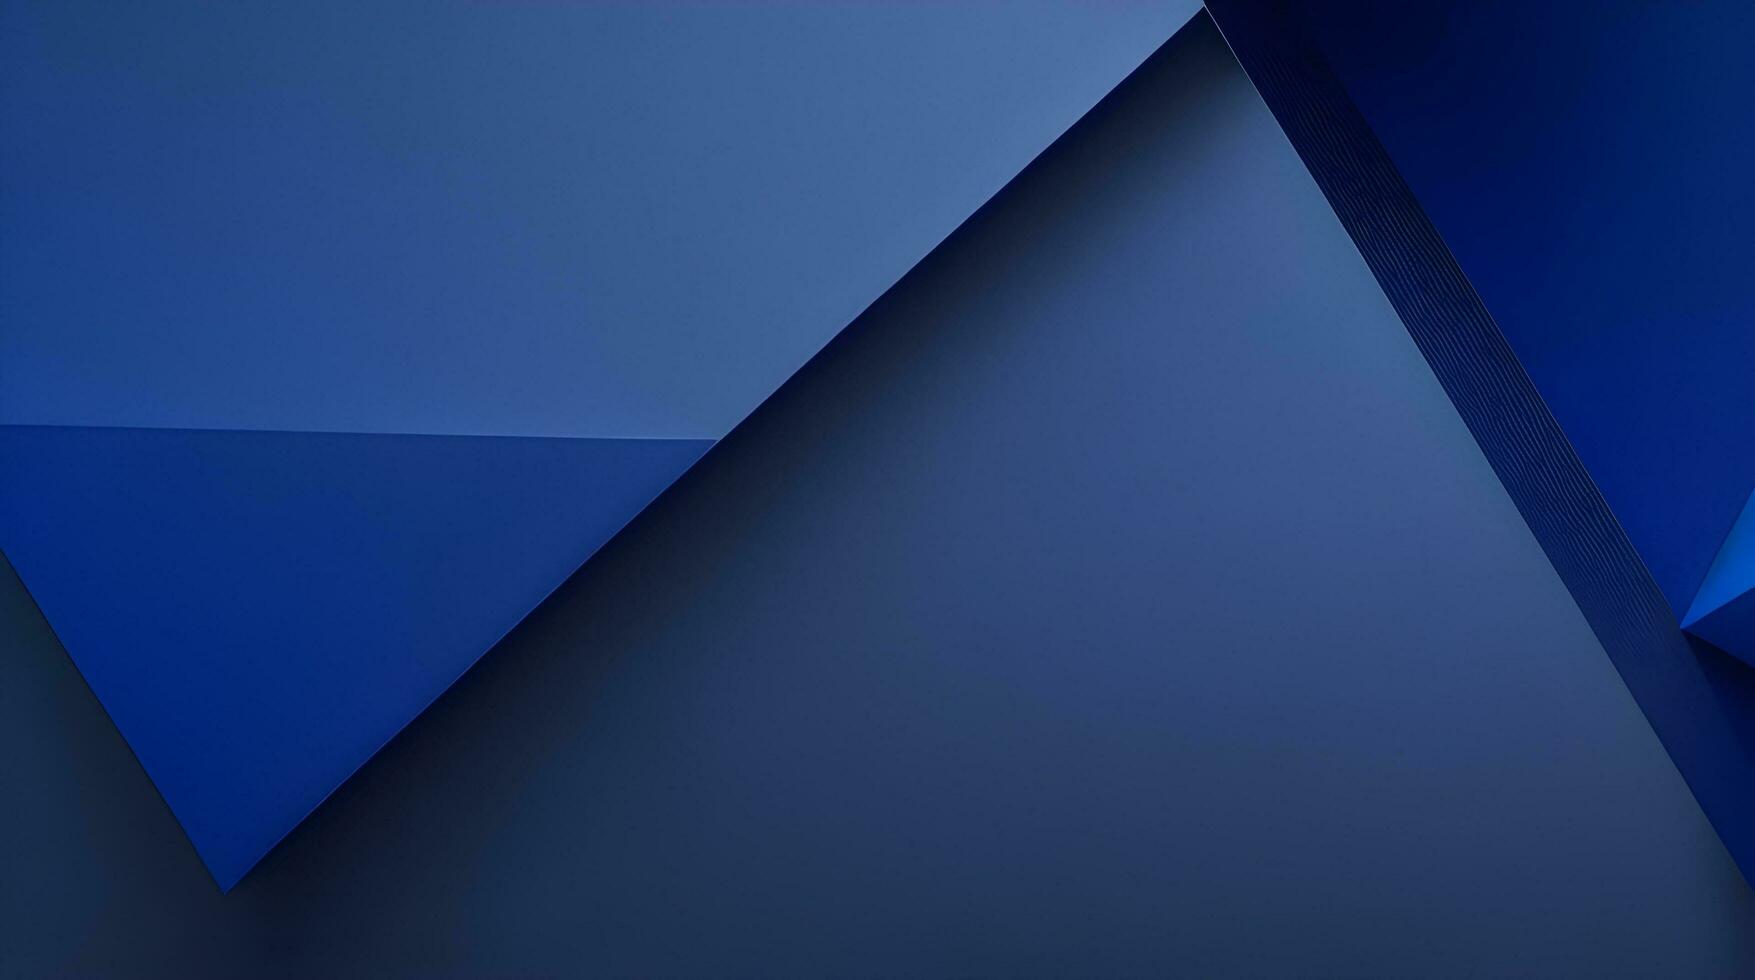 elegant 3d diagonal mörk blå. djup och perspektiv i en slående bakgrund foto